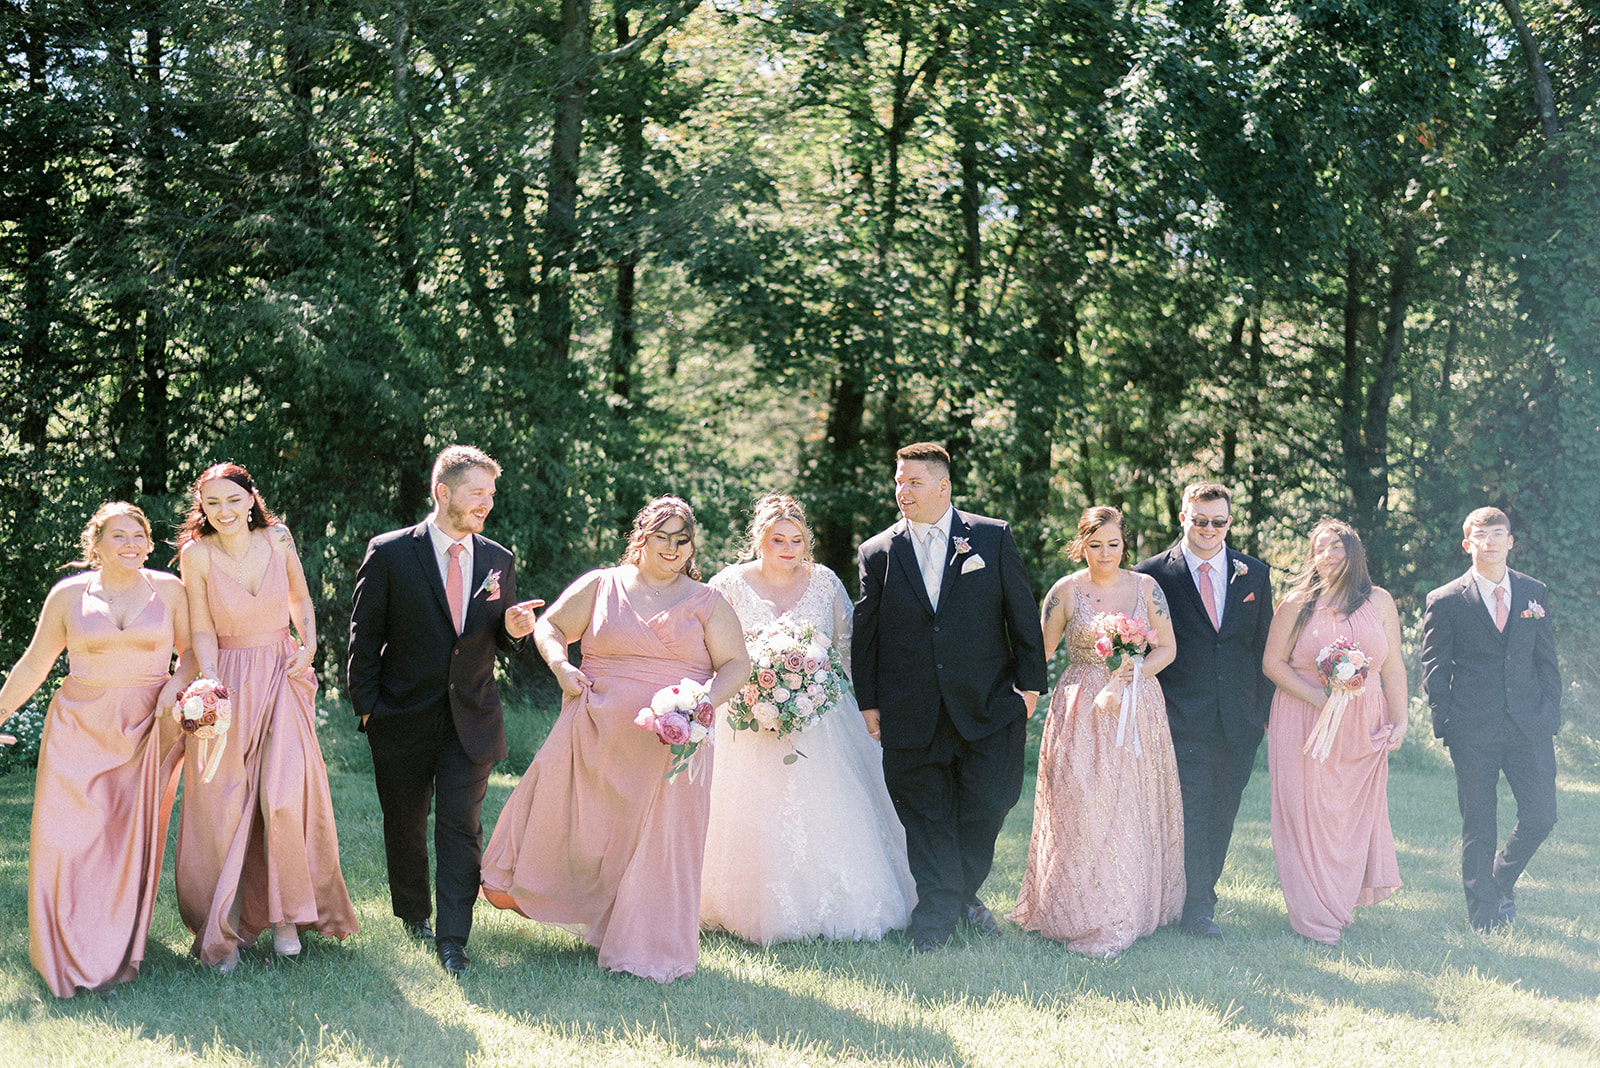 Pennsylvania wedding photographer captures wedding party walking together after wedding